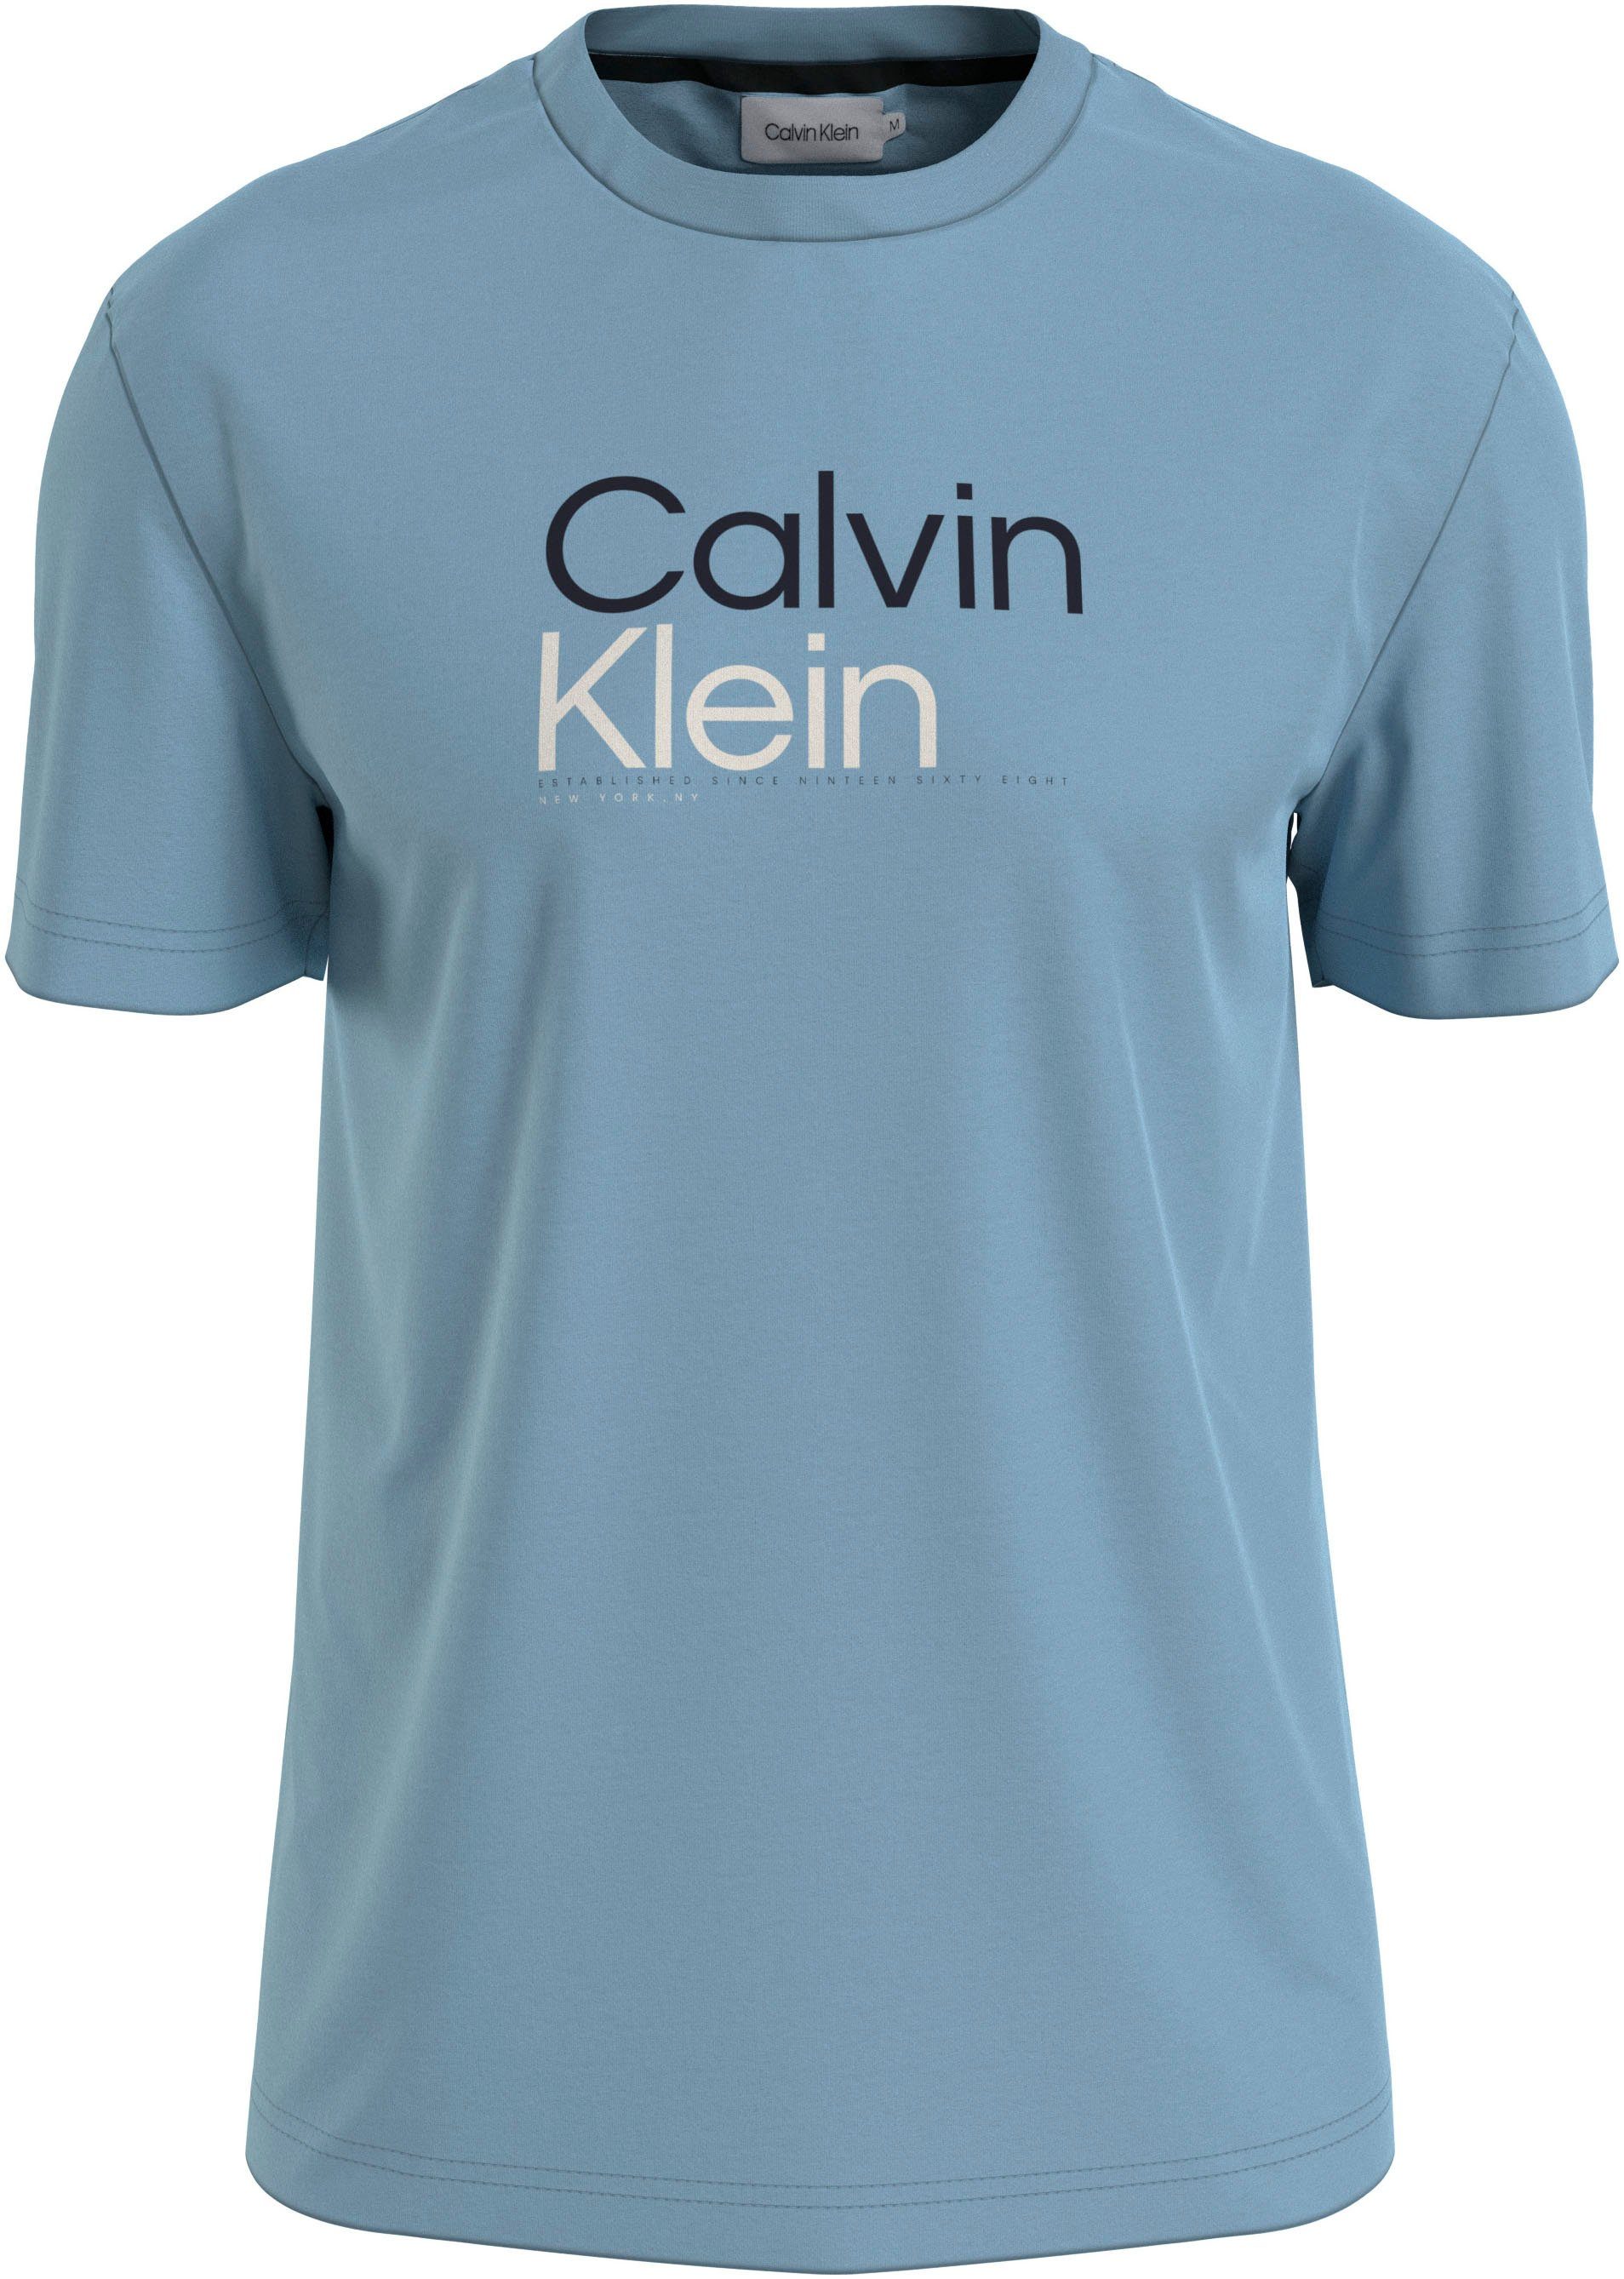 Am besten Calvin Klein Big&Tall T-Shirt BT_MULTI Tropic COLOR Blue mit Markenlabel LOGO T-SHIRT